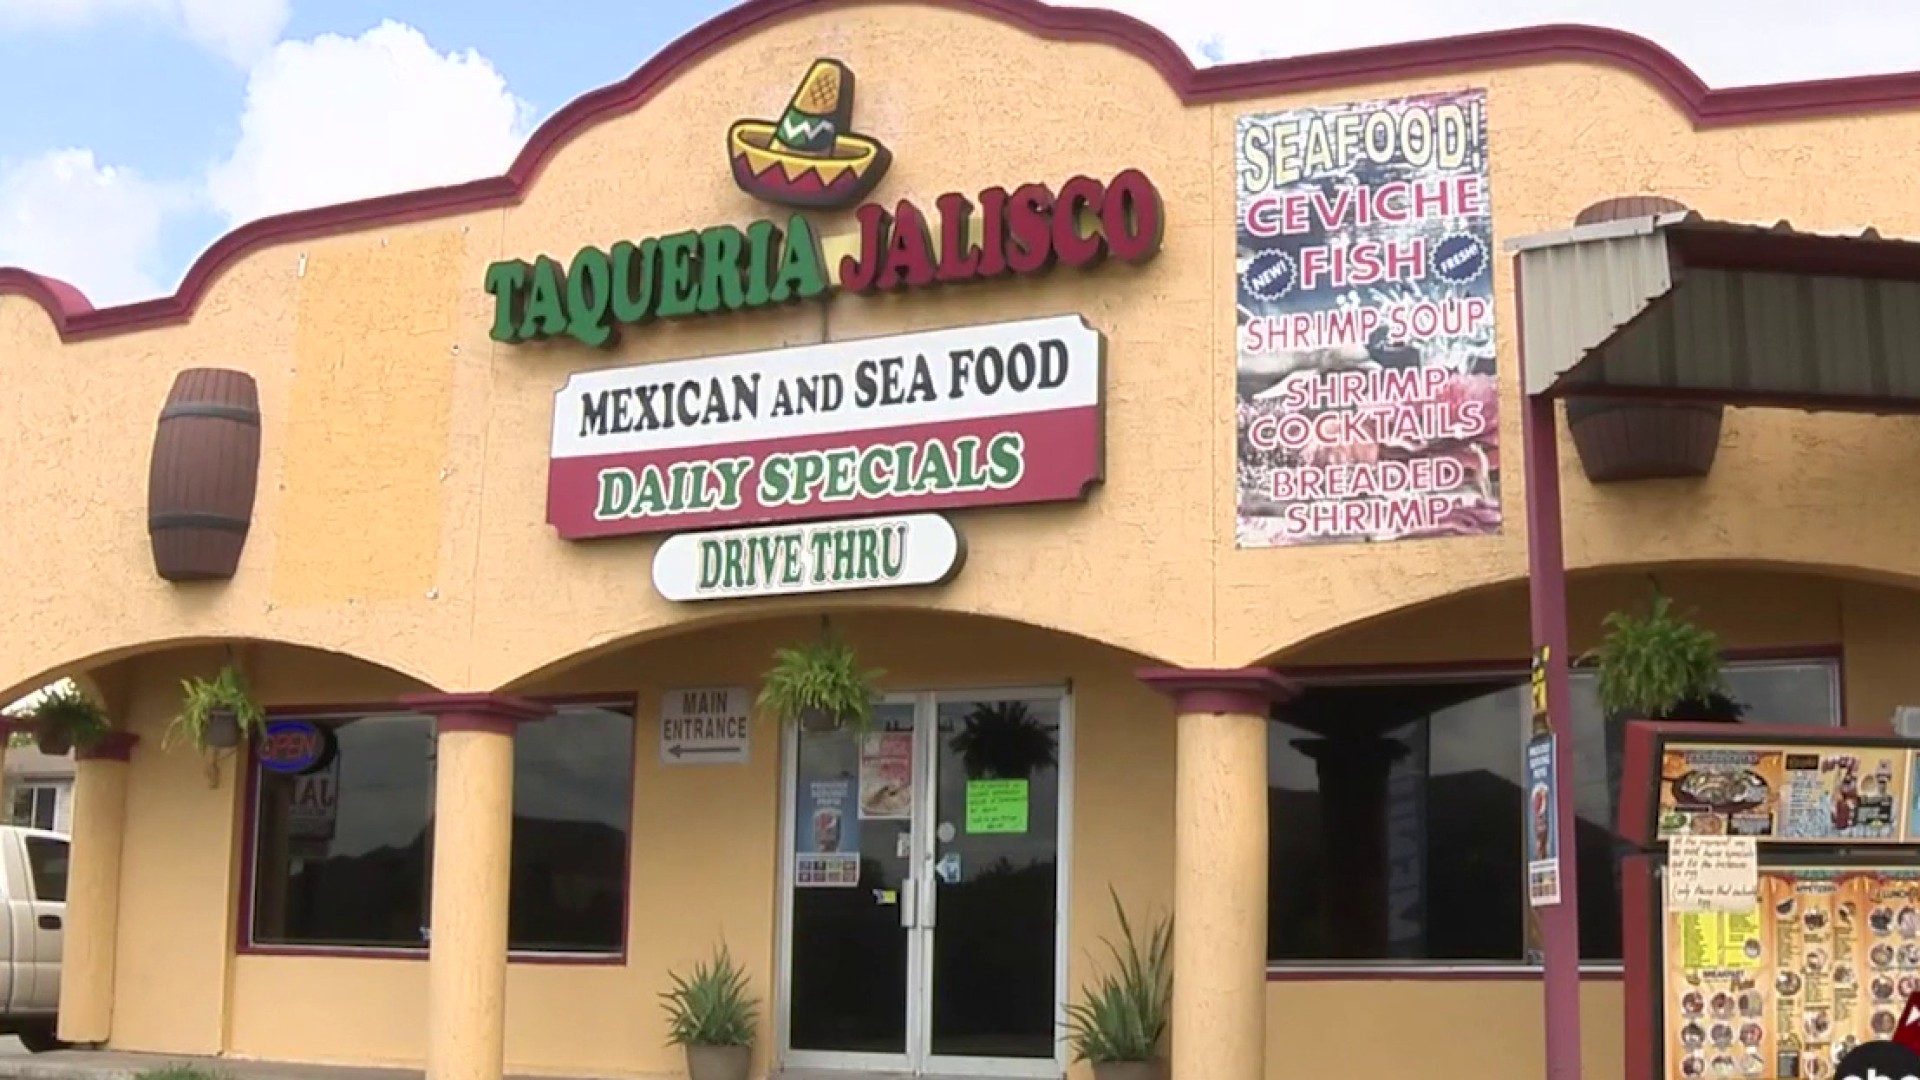 Orange County Mexican Restaurants: La Salsa - Review #1½